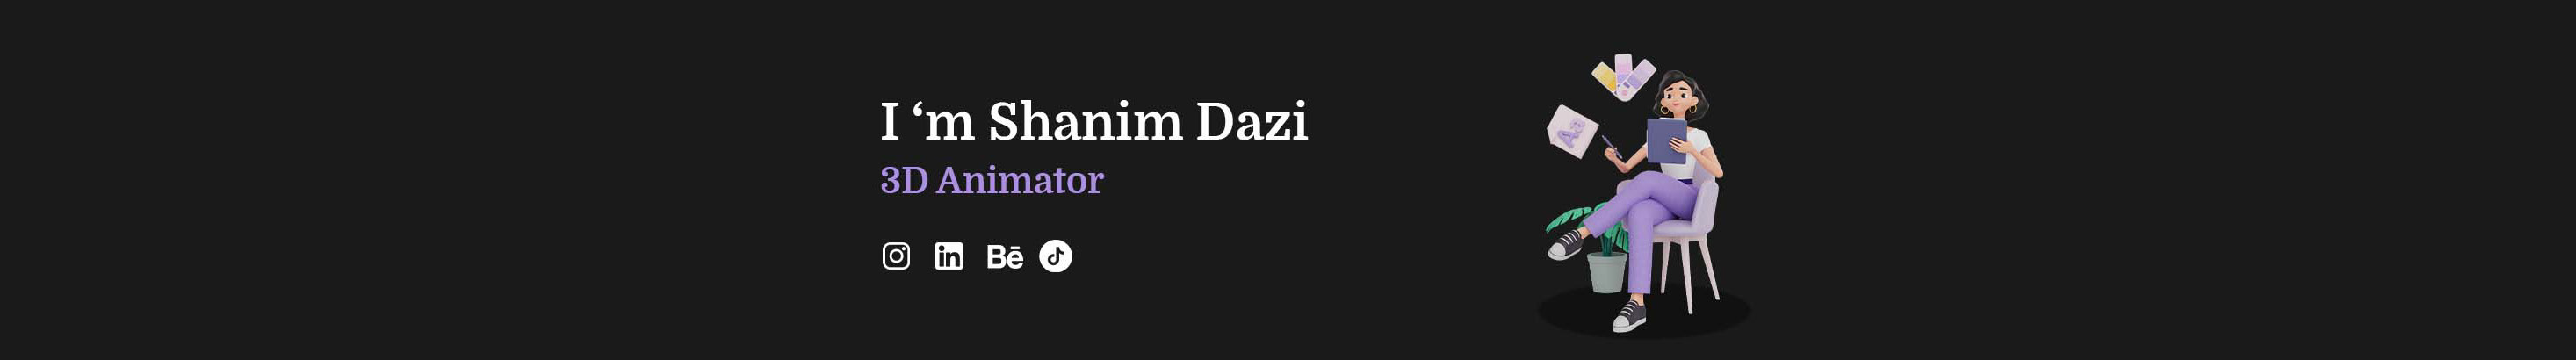 Banner de perfil de Shanim Dazi